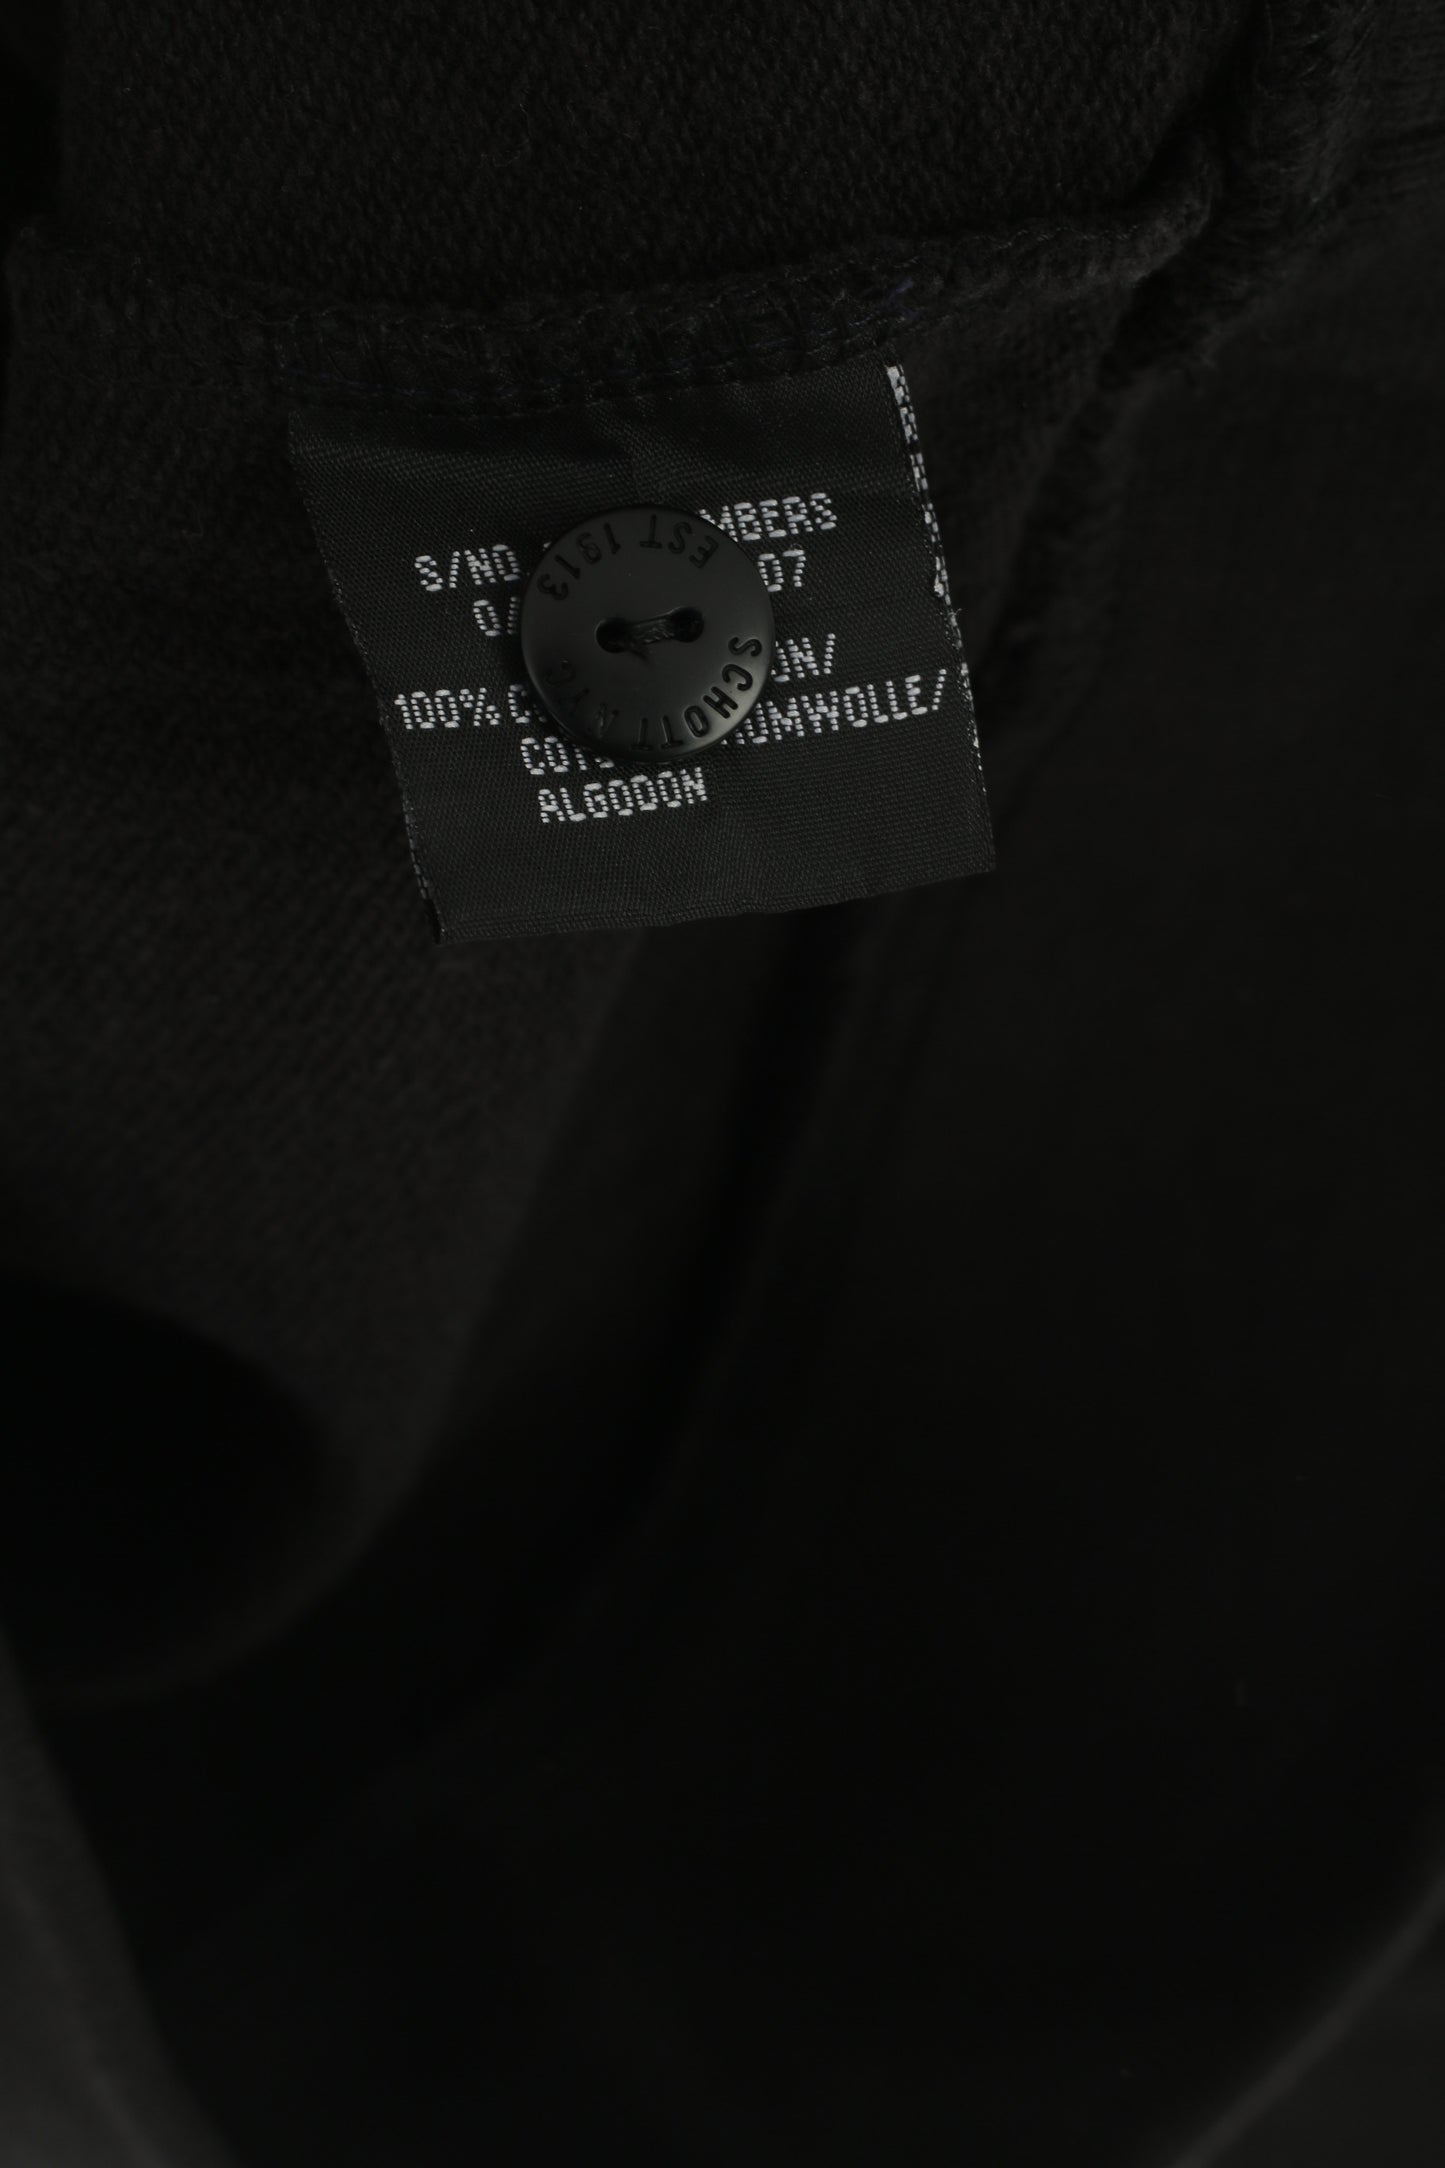 Schott NYC Men M (S) Sweatshirt Black Cotton Hooded Bros Logo Army Top